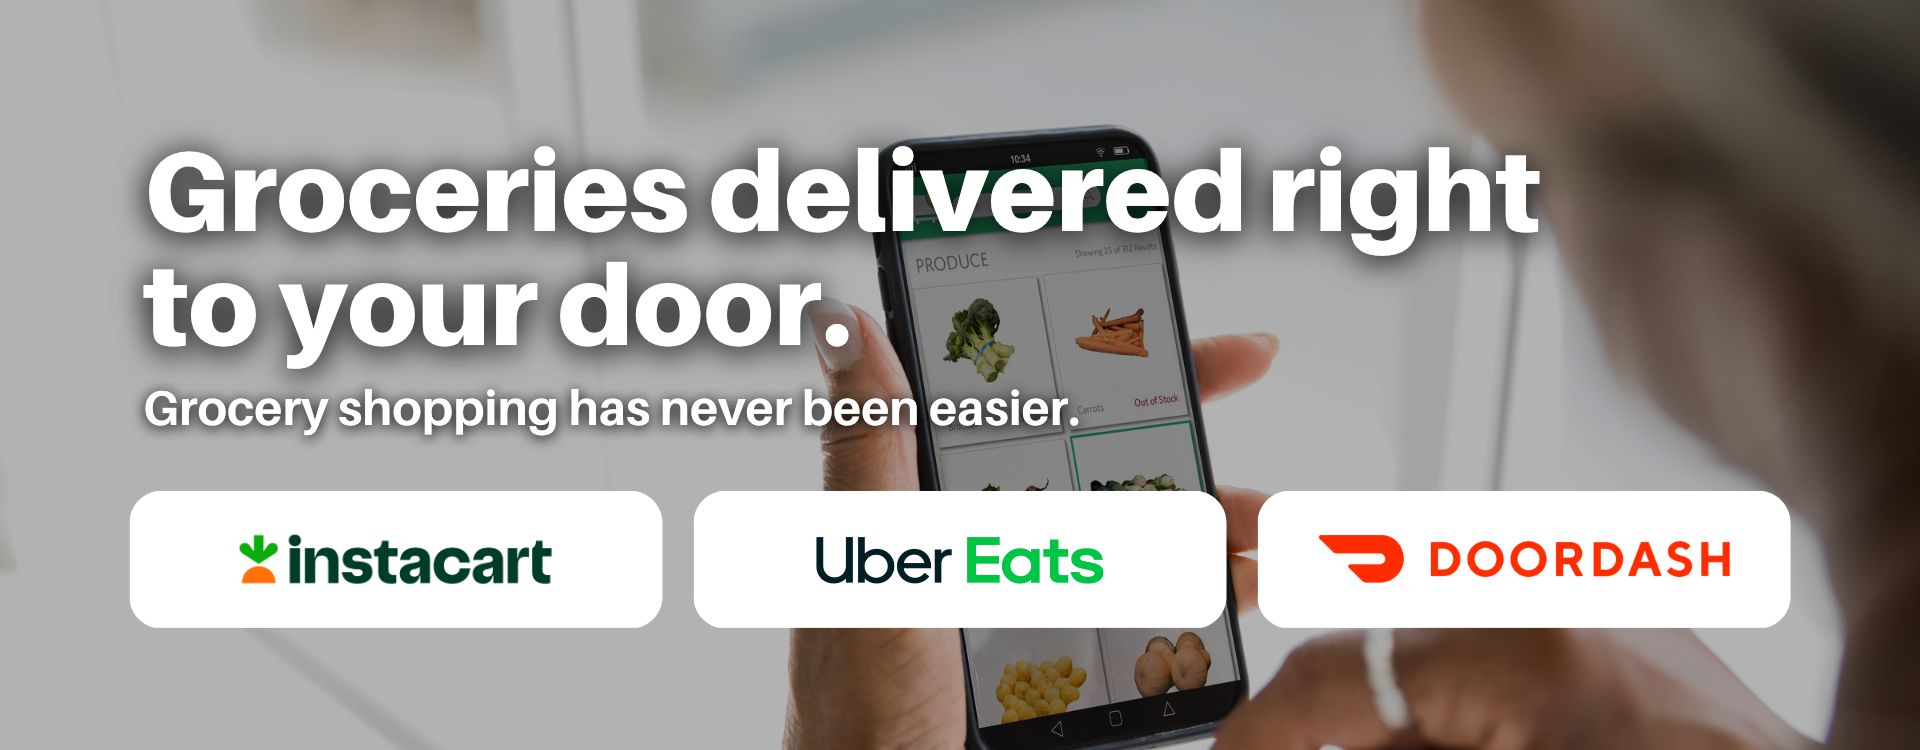 Groceries delivered right to your door. Grocery shopping has never been easier. Instacart logo, UberEats logo, and DoorDash logo